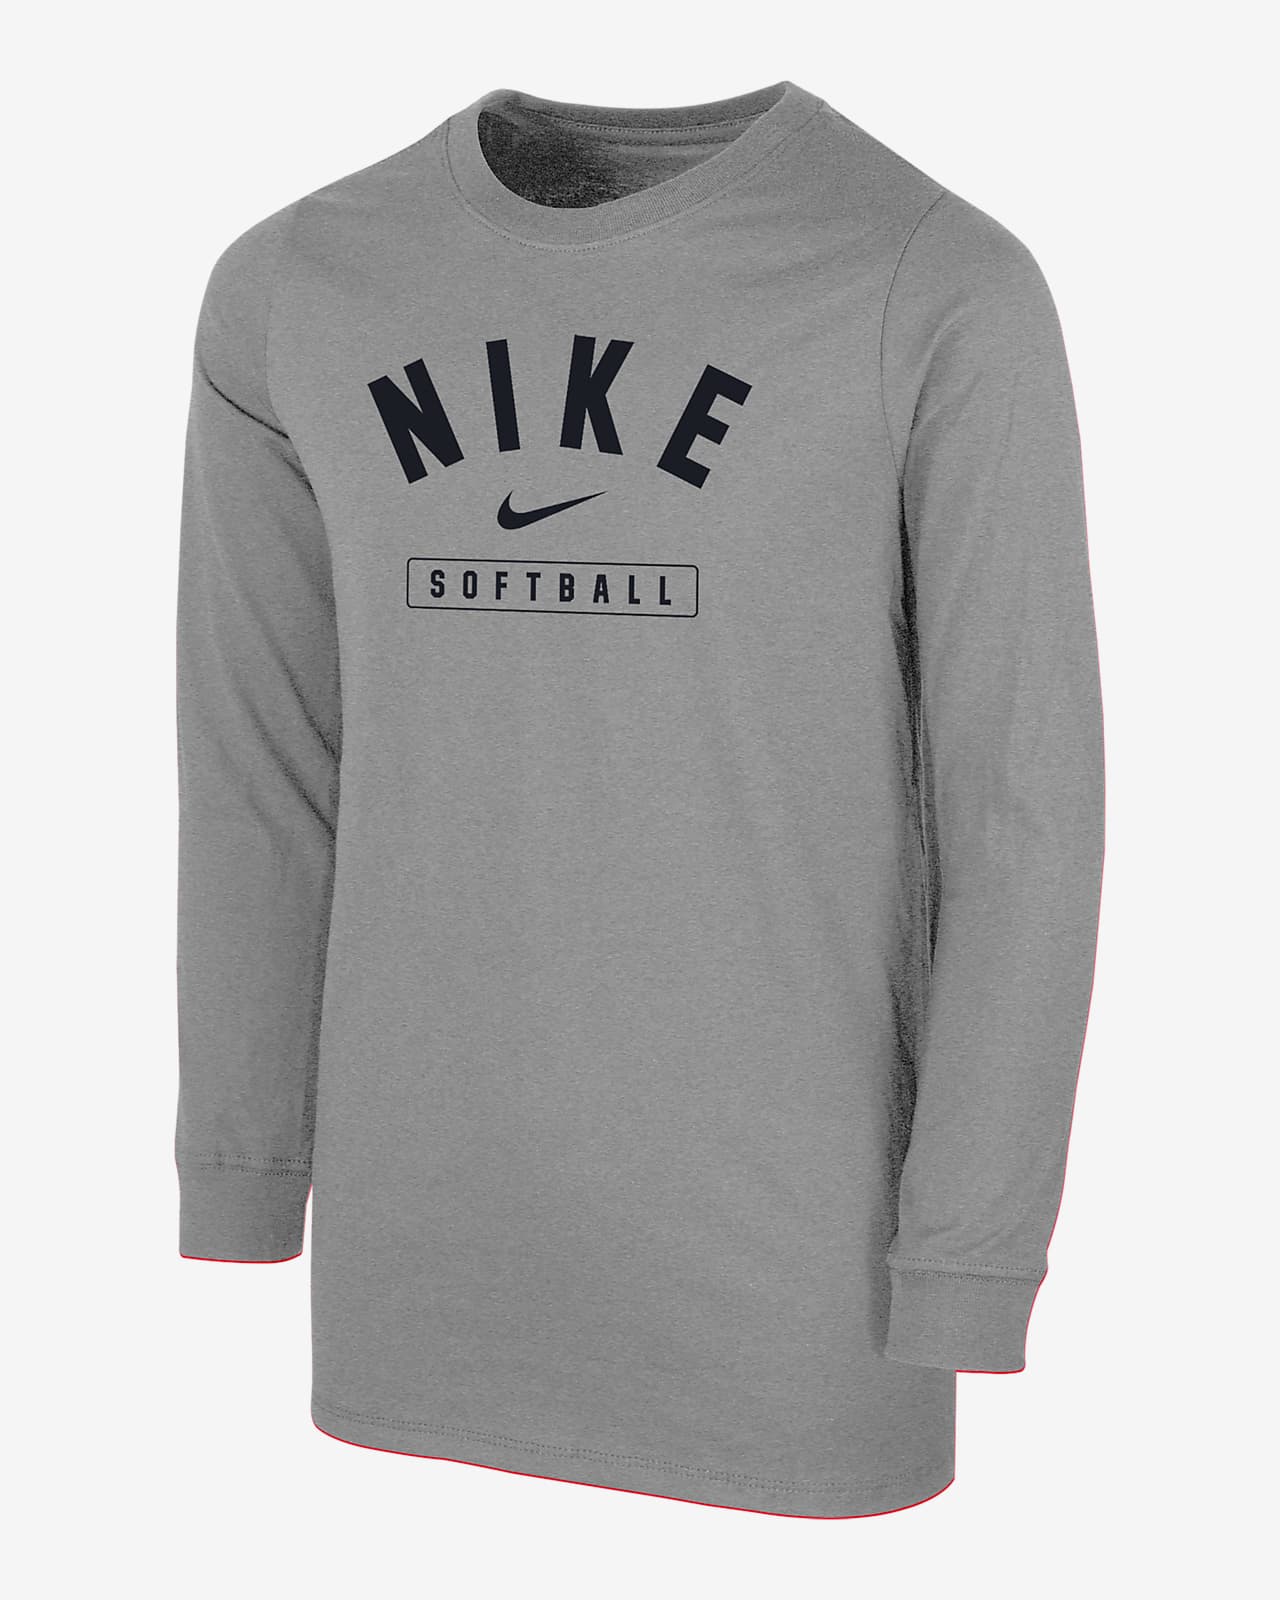 Nike Big Kids' Softball Long-Sleeve T-Shirt